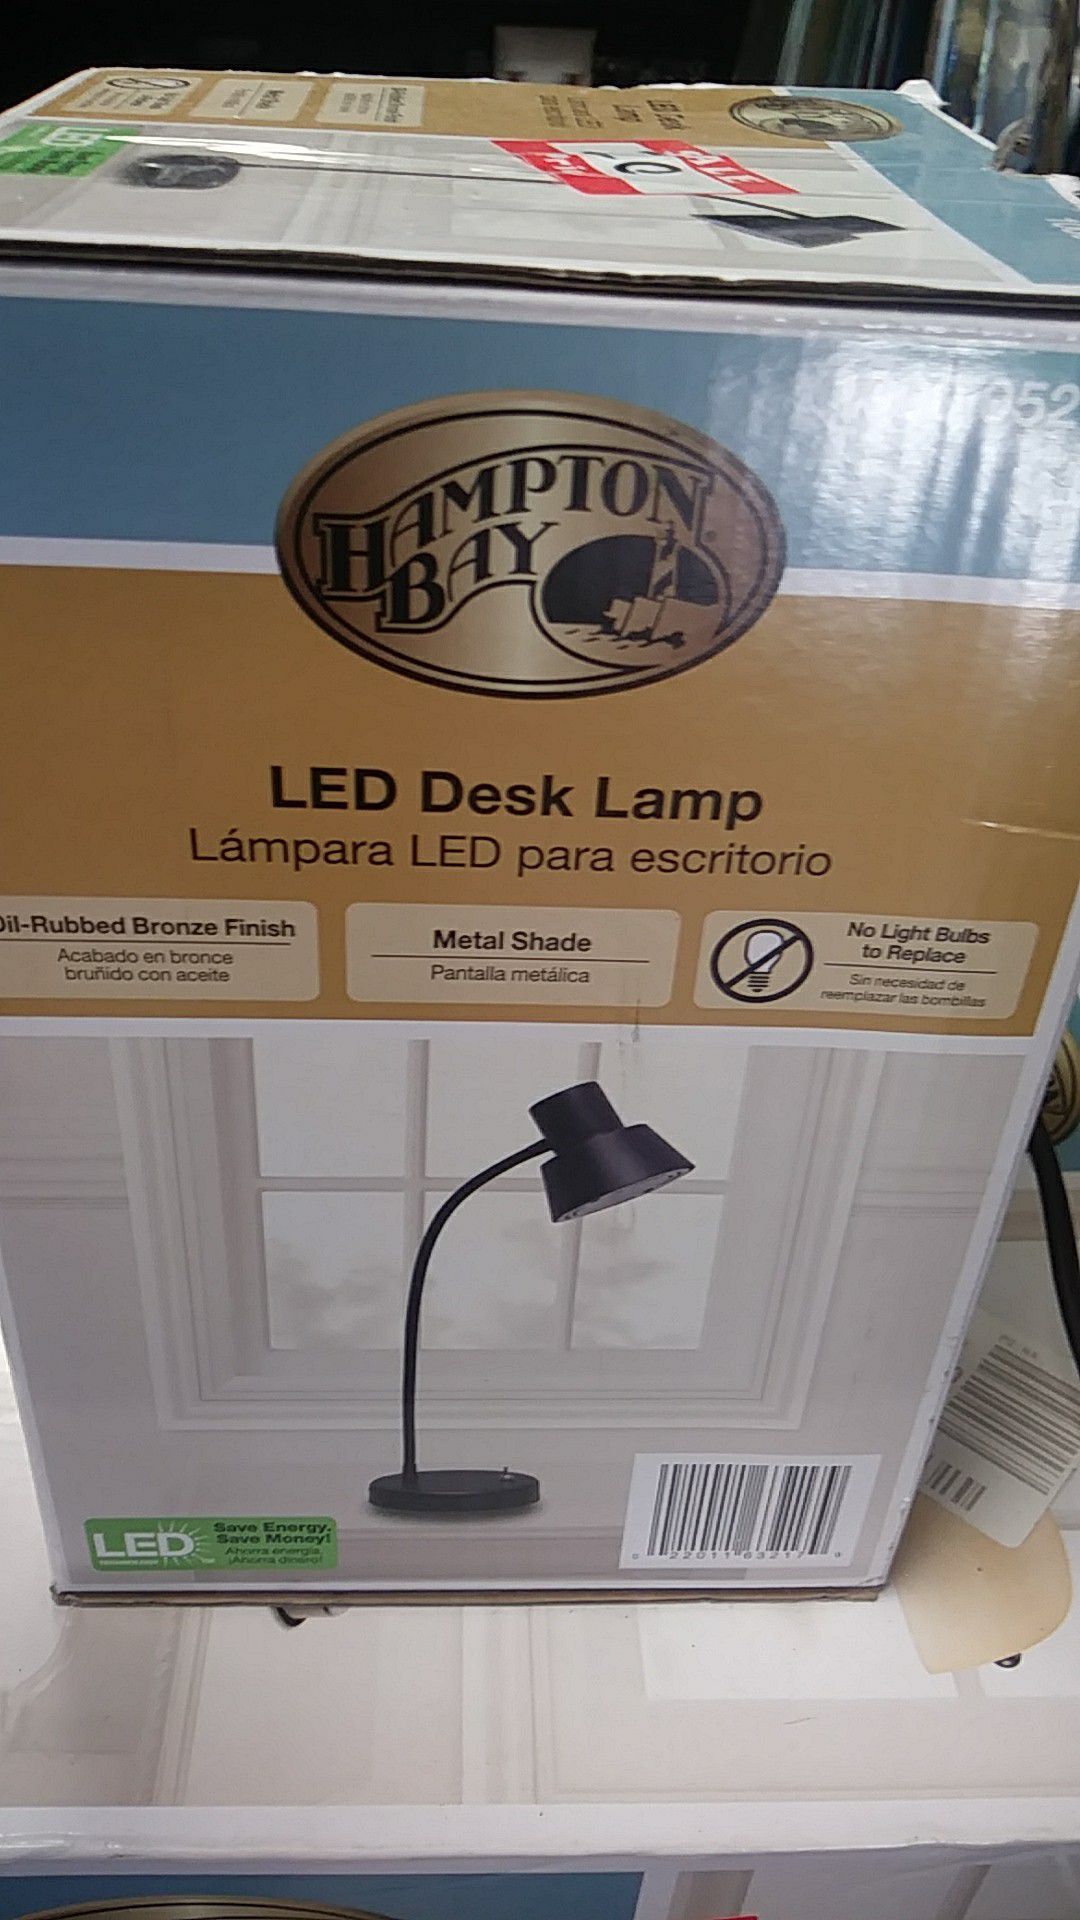 Small LED desk lamp